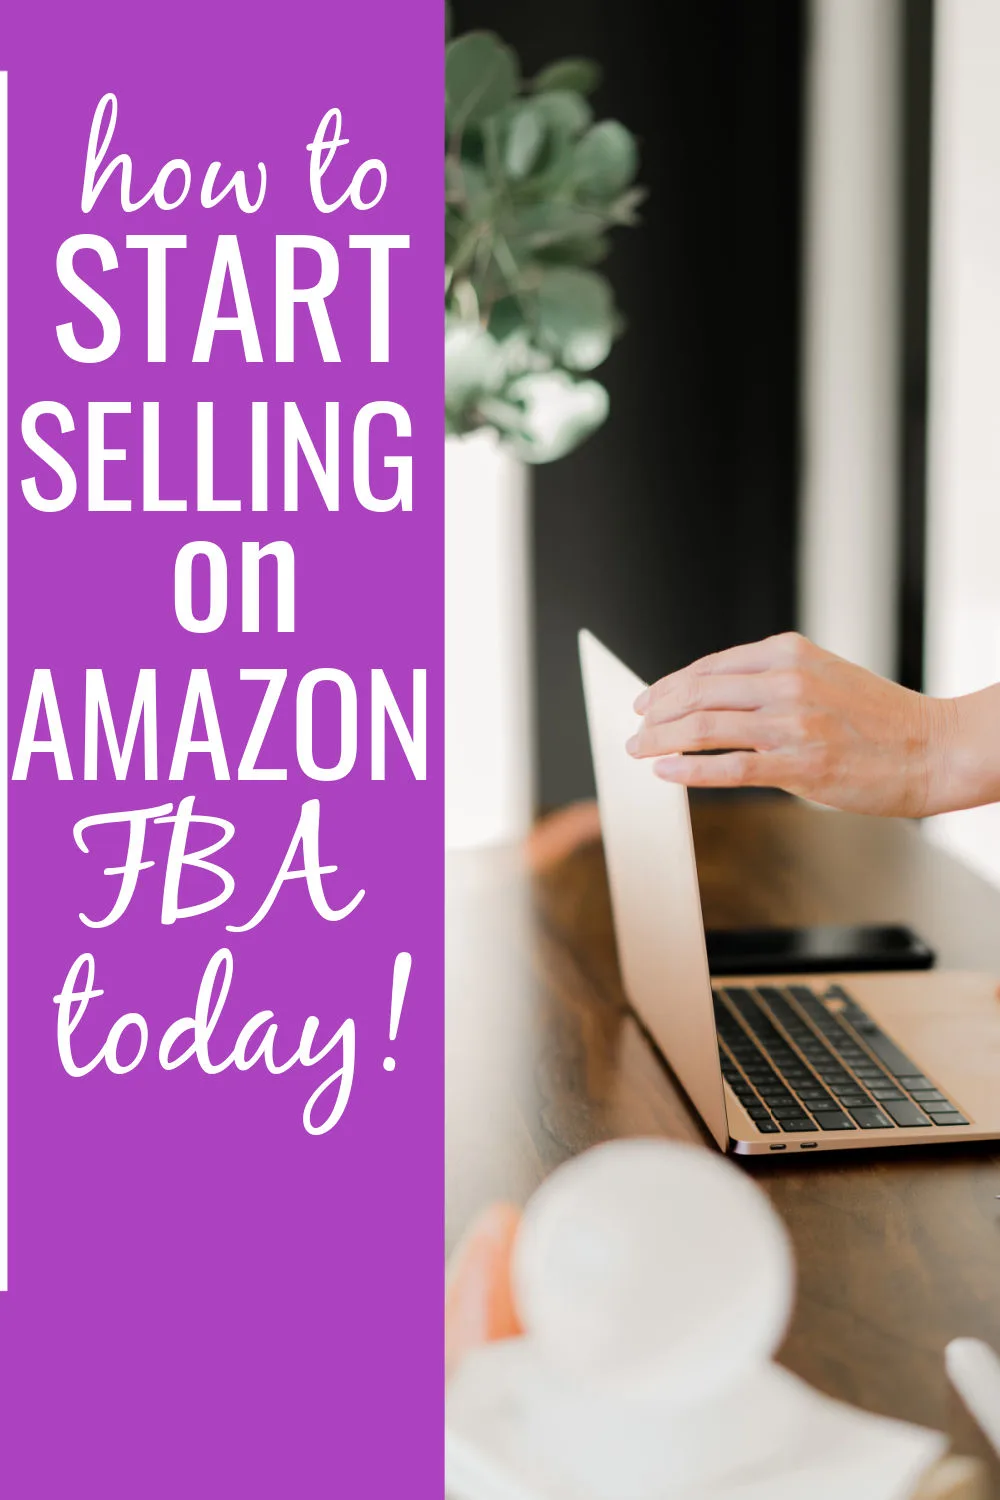 How to start selling on Amazon FBA